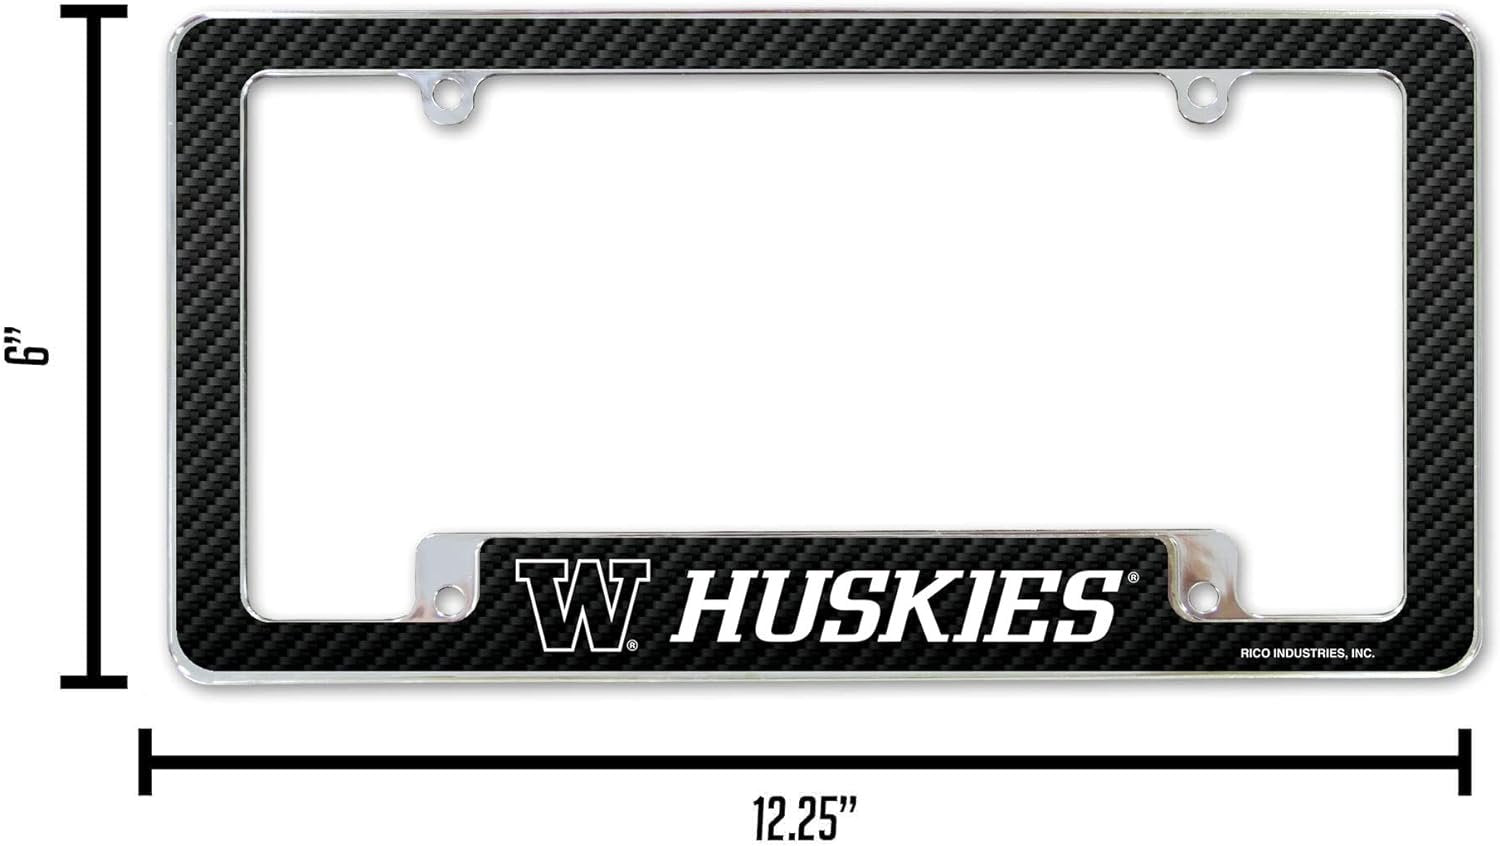 University of Washington Huskies Metal License Plate Frame Chrome Tag Cover 12x6 Inch Carbon Fiber Design